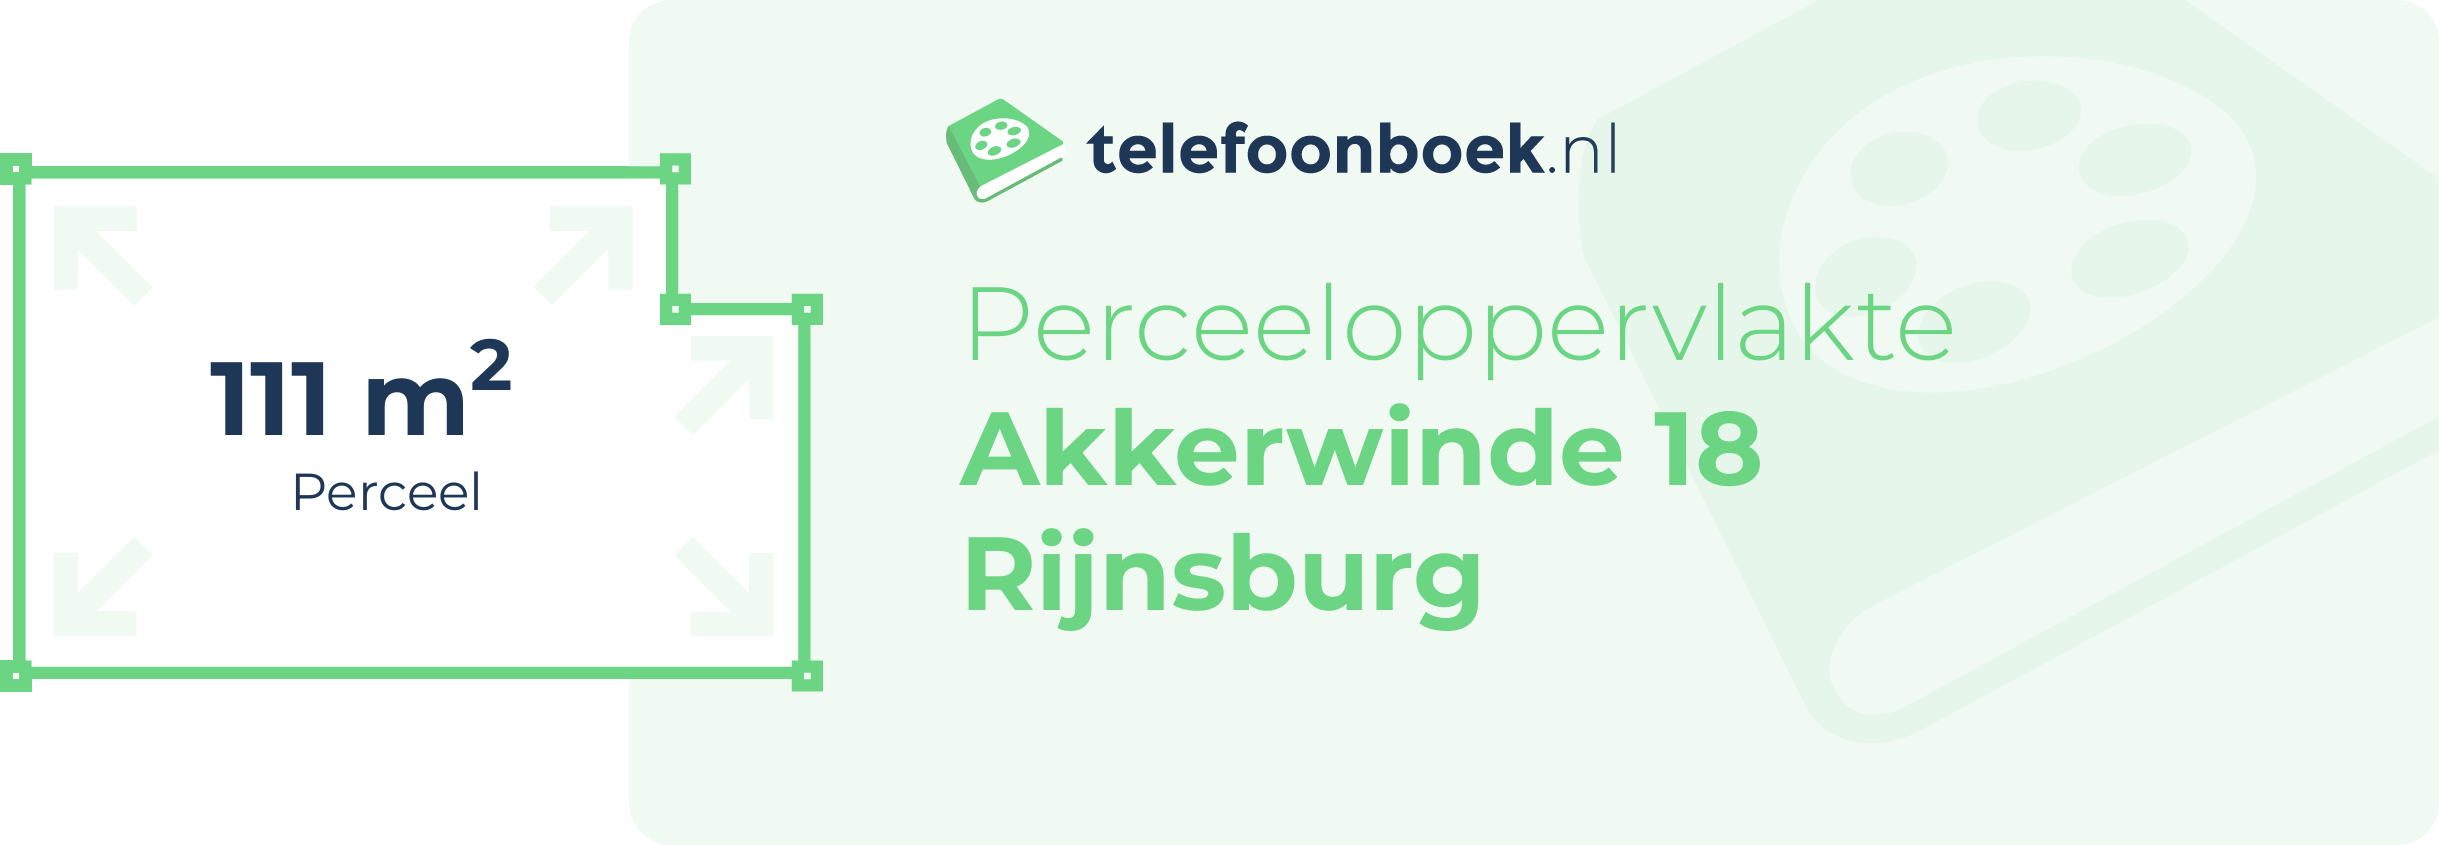 Perceeloppervlakte Akkerwinde 18 Rijnsburg